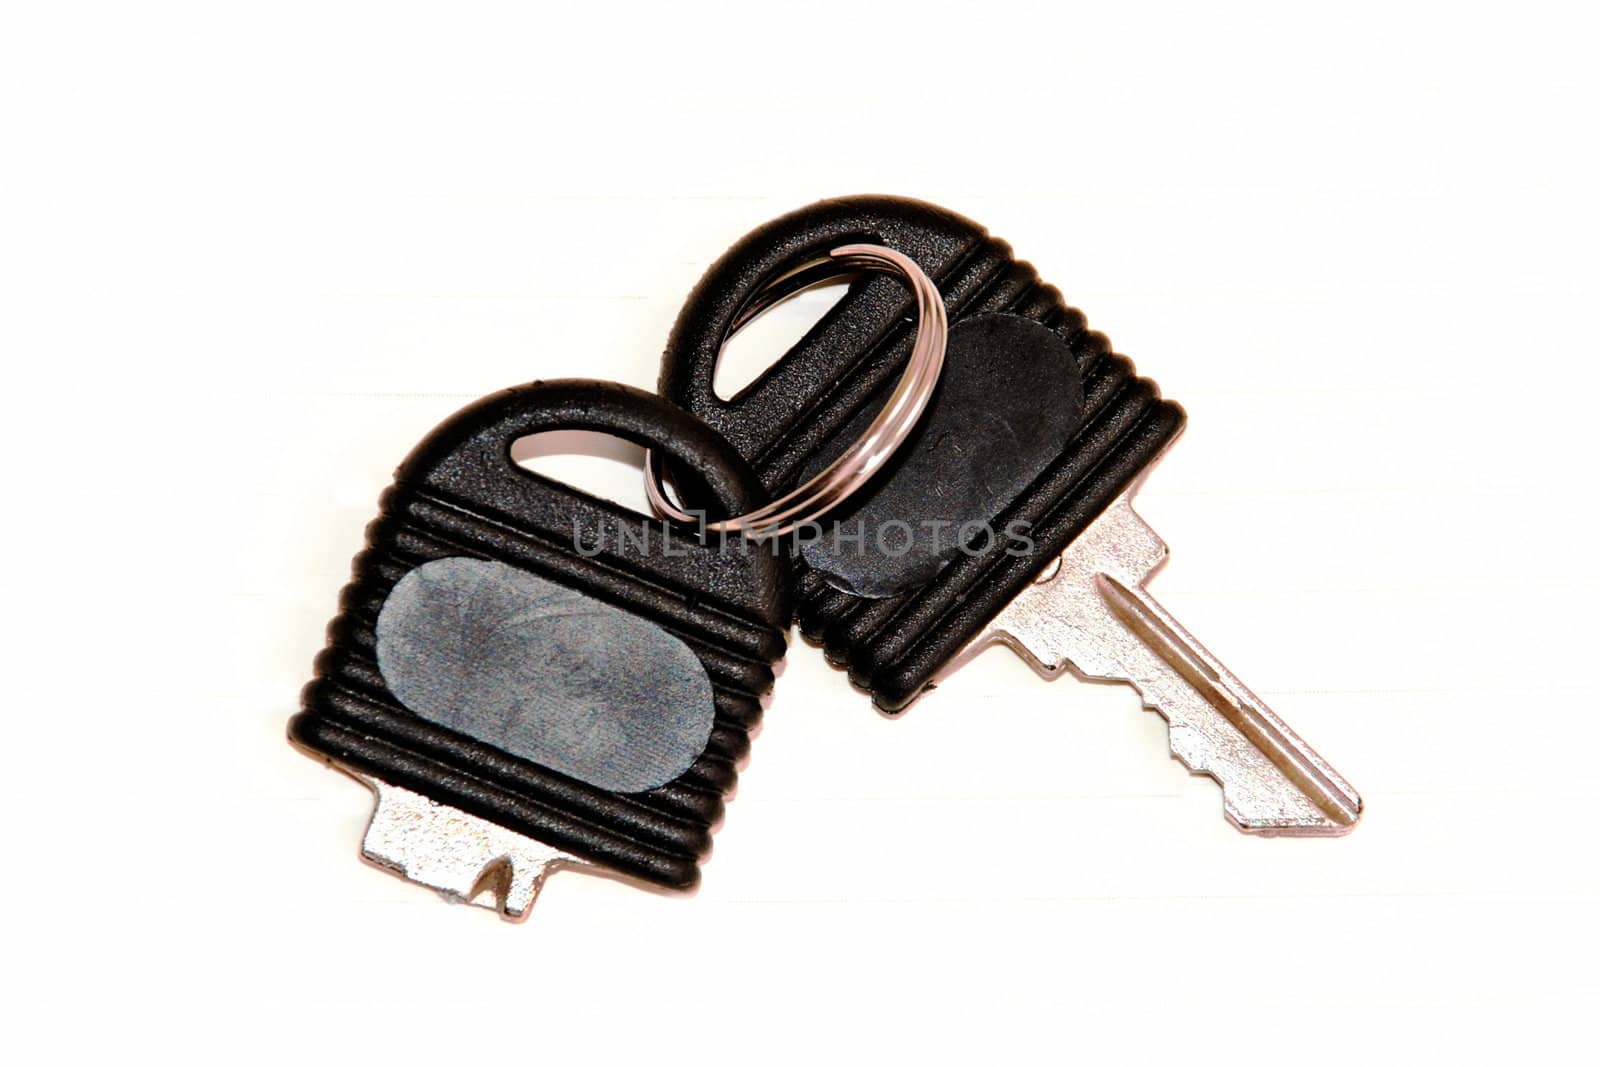 broken black office key isolation over white close up